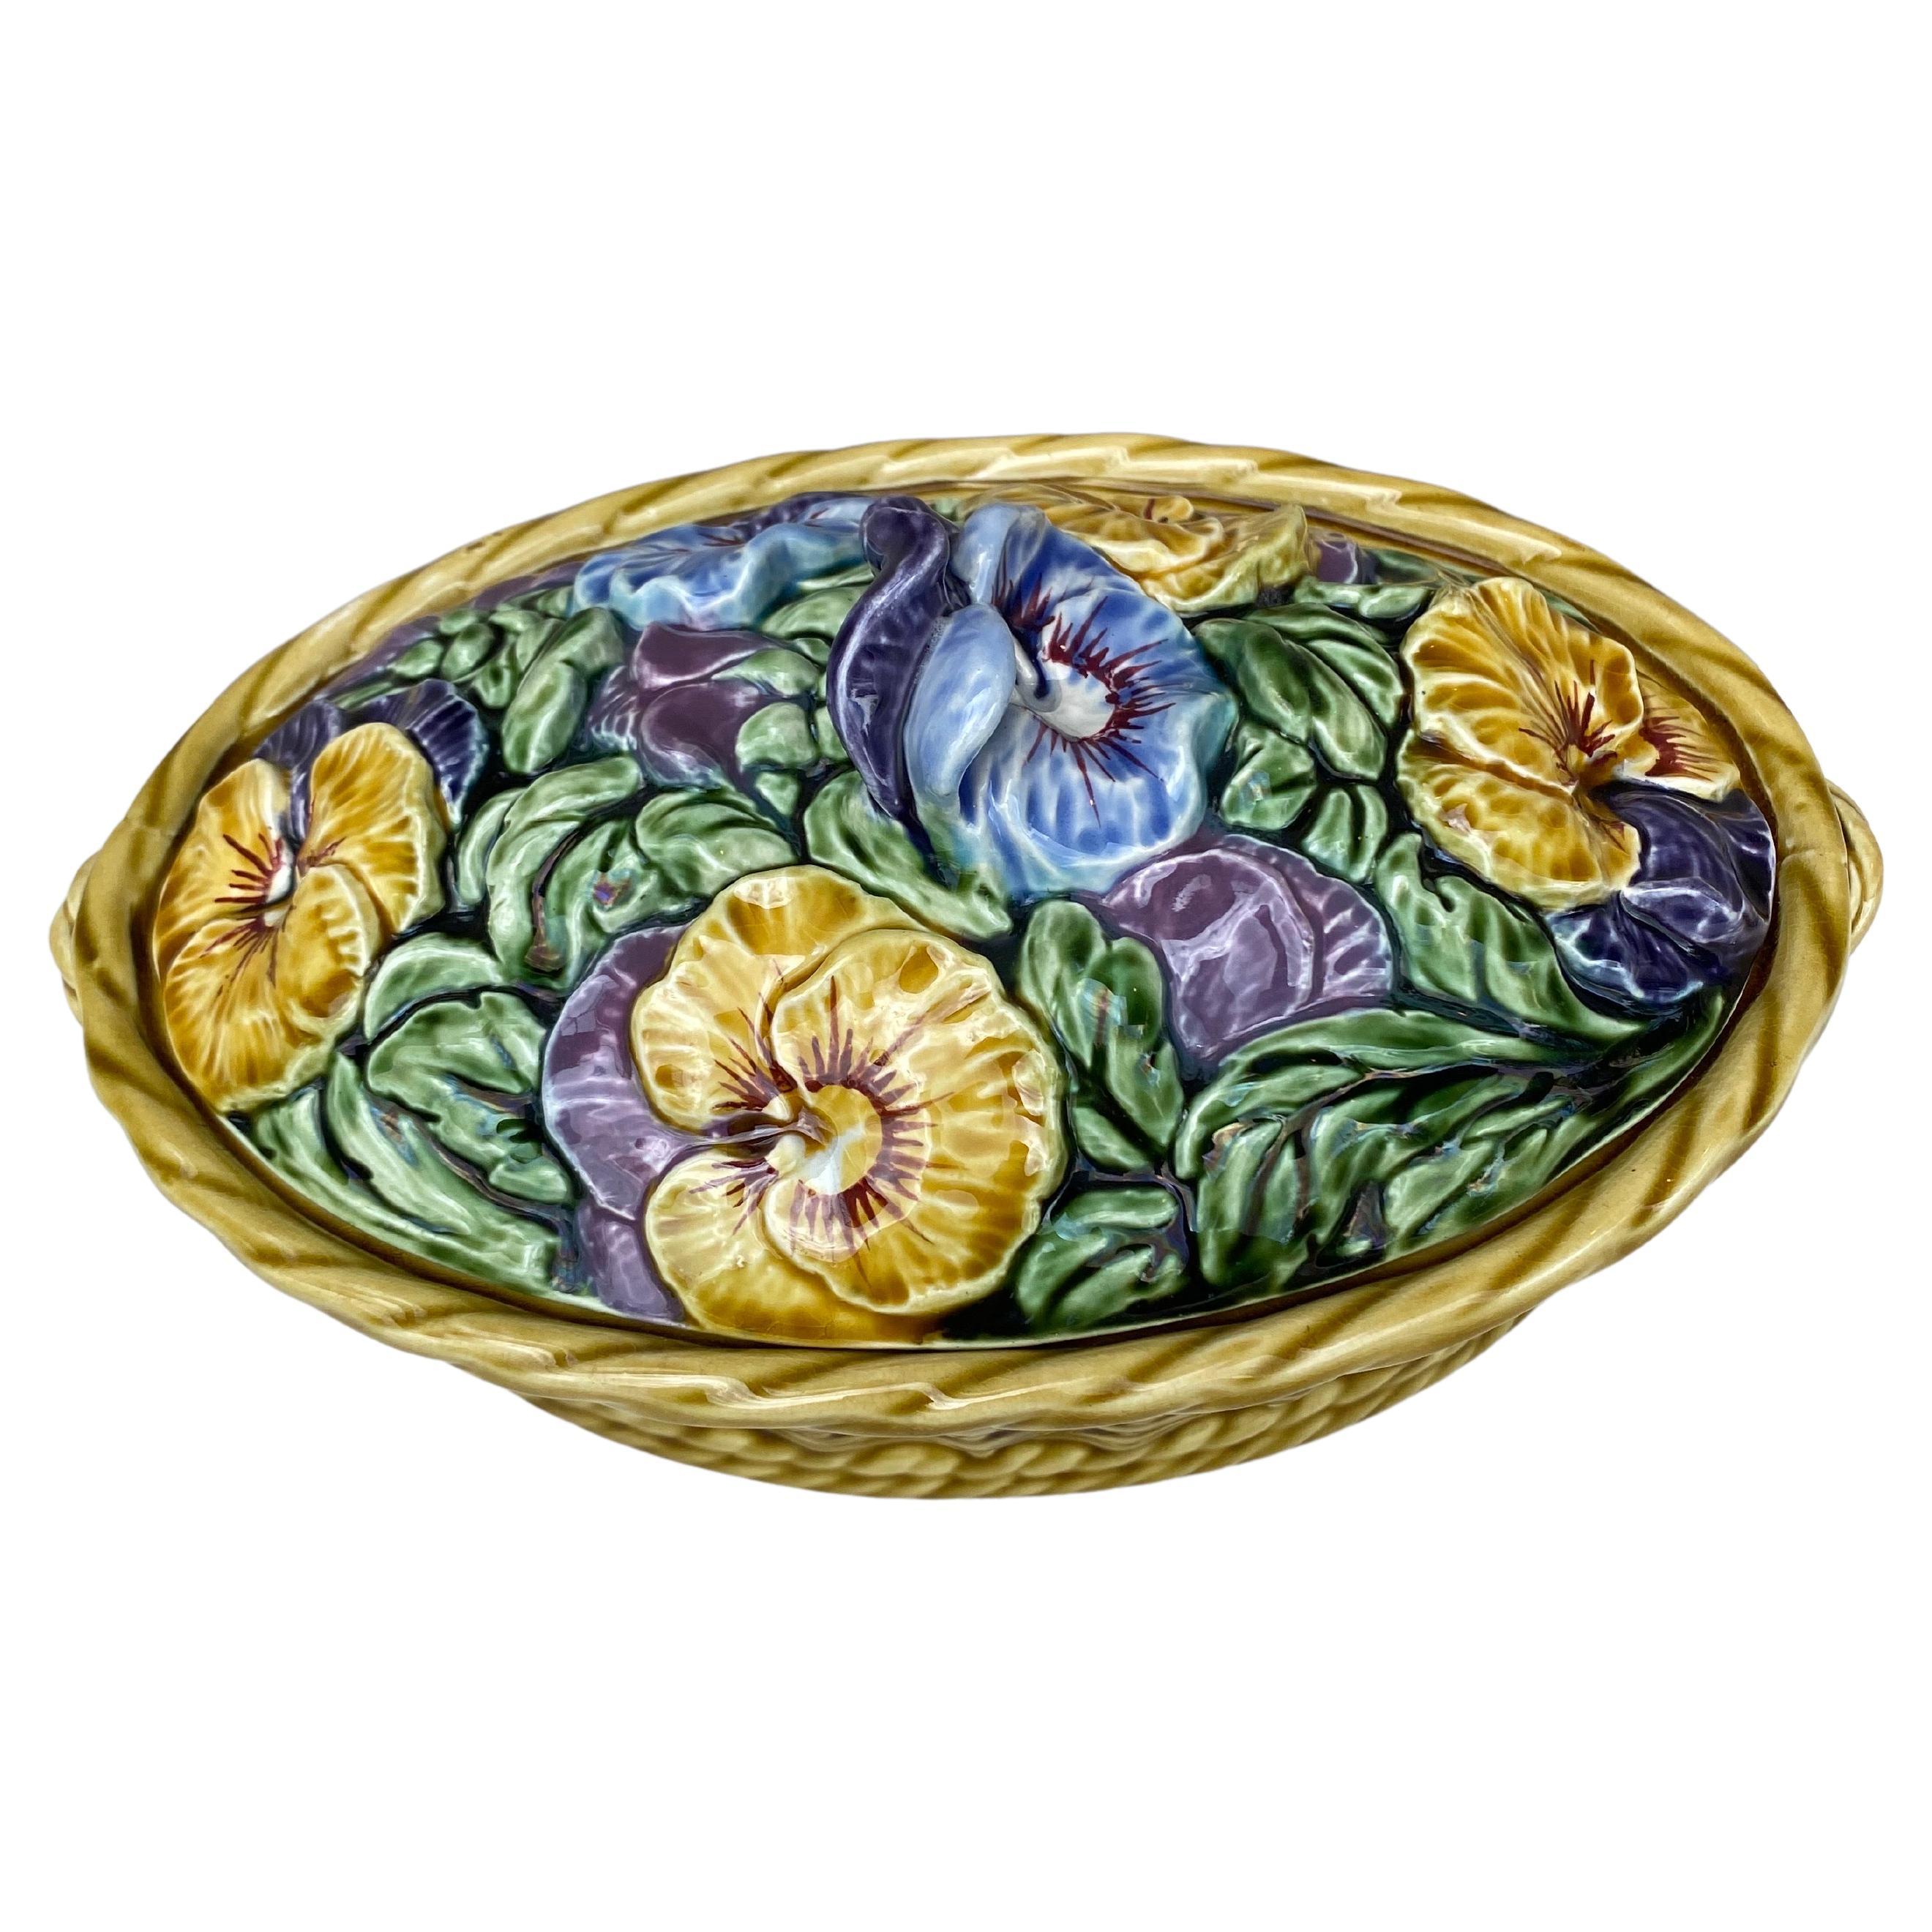 Großer ovaler Korb aus Majolika mit Stiefmütterchenblüten, signiert Sarreguemines, um 1920.